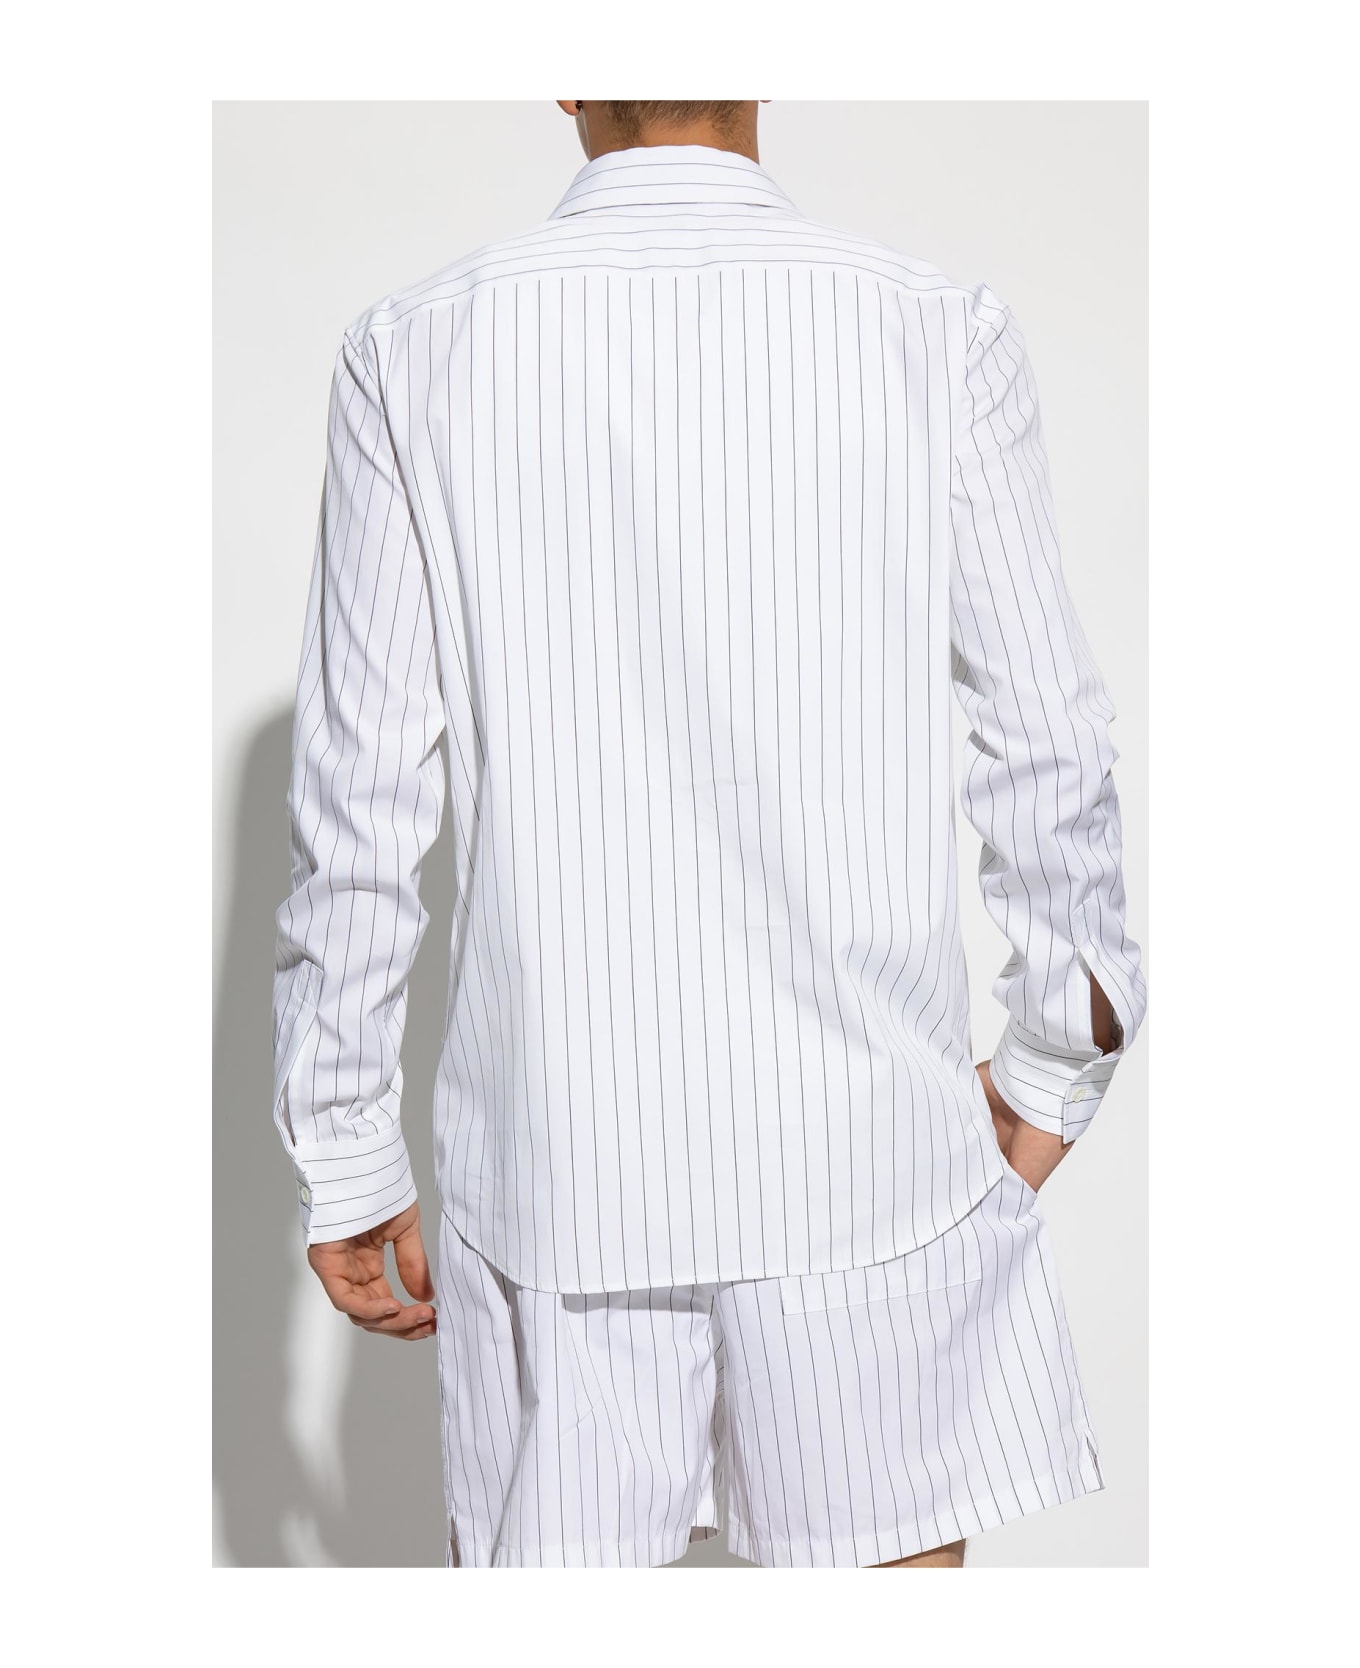 Bottega Veneta Striped Cotton Shirt - WHITE/GREY STRIPES